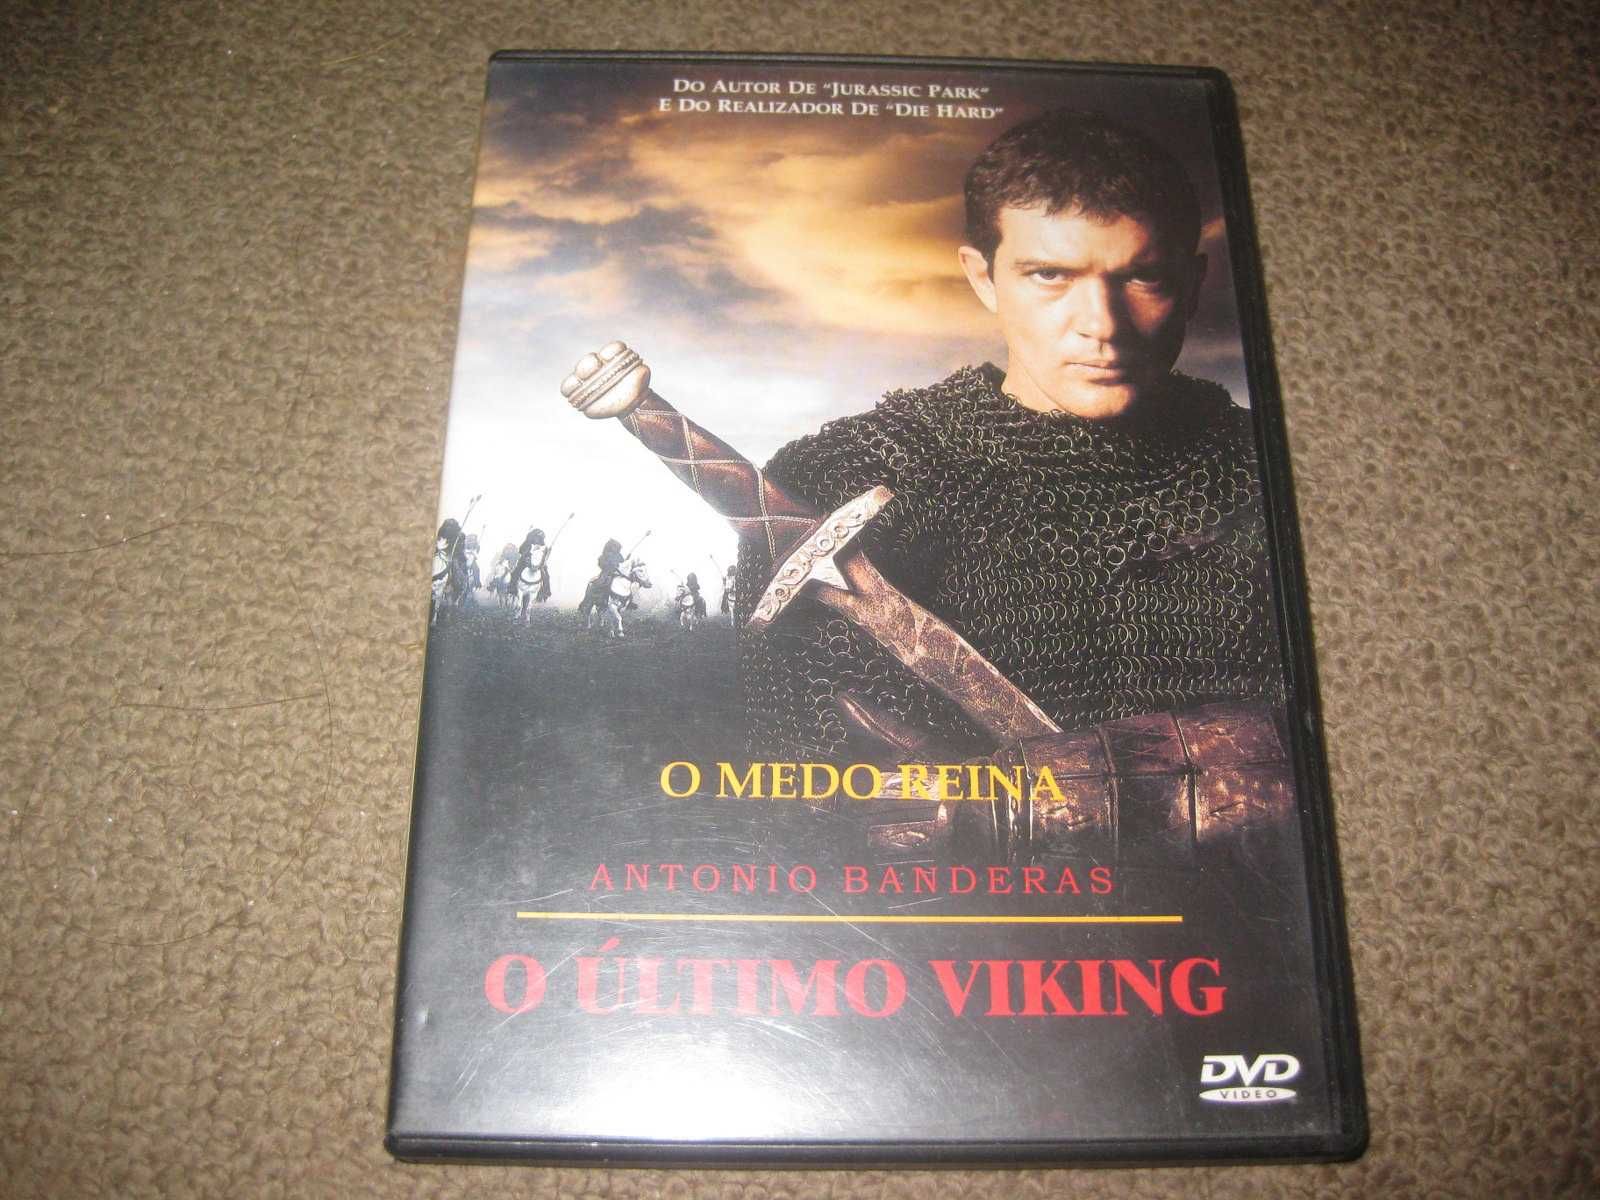 DVD "O Último Viking" com Antonio Banderas